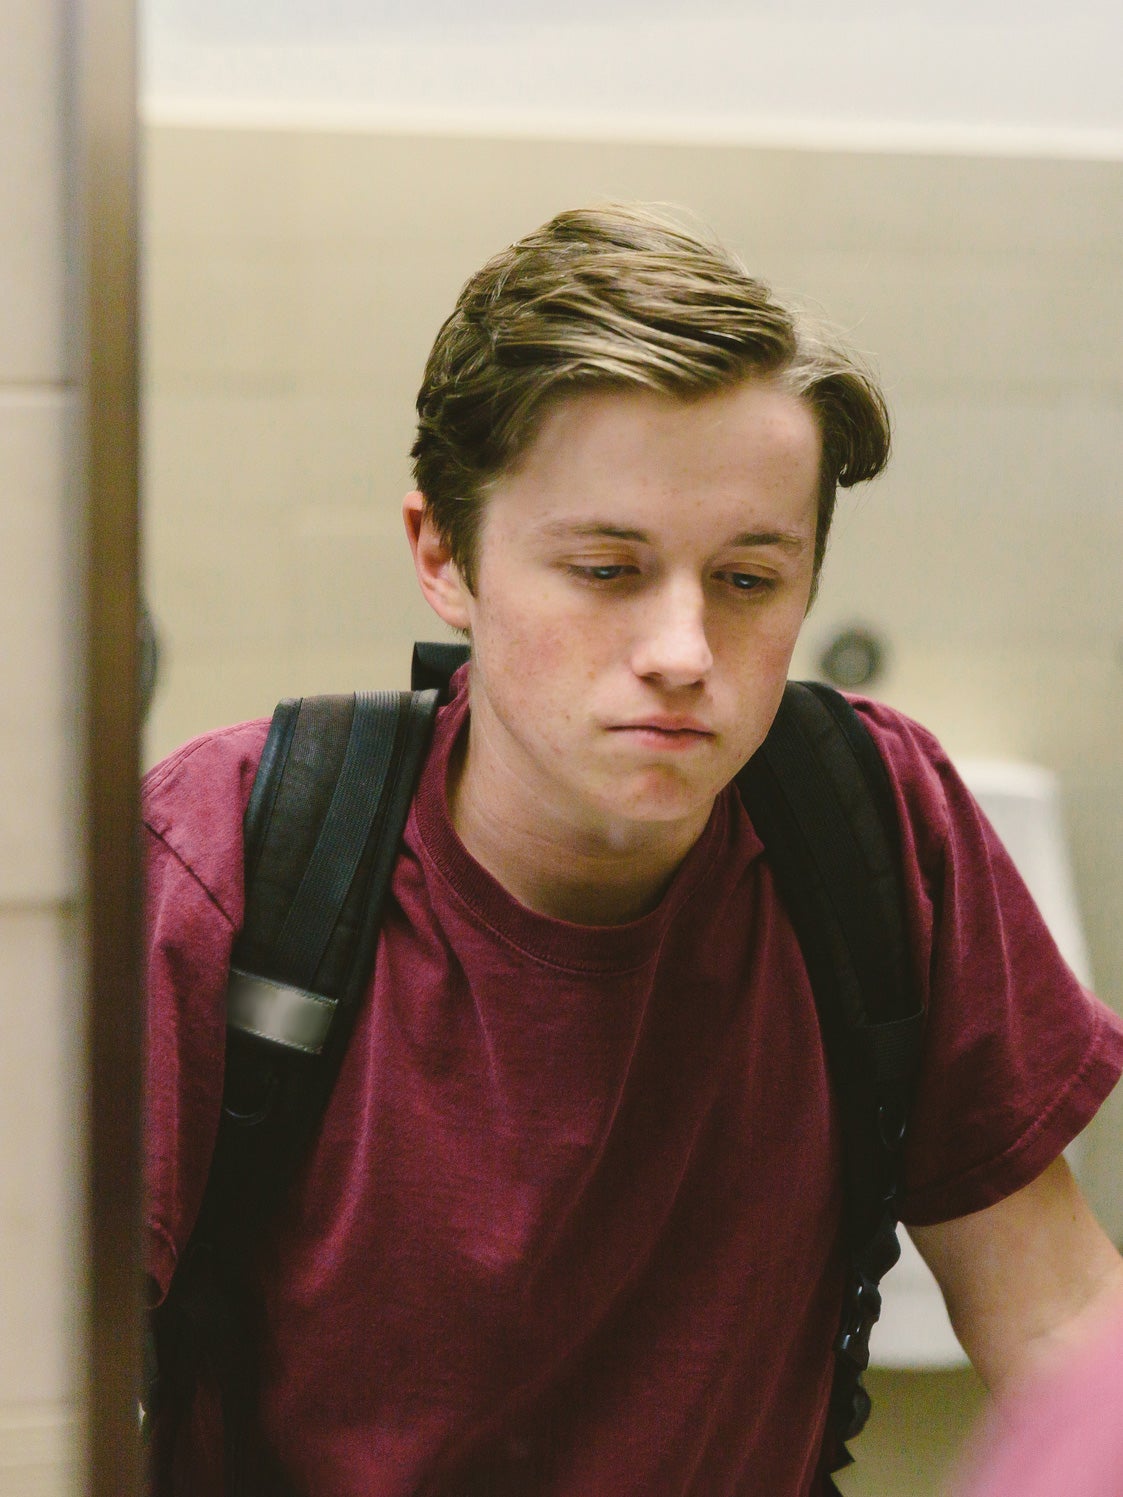 A depressed-looking, white teenage boy wearing a maroon shirt and black backpack looks at himself in a school bathroom mirror.